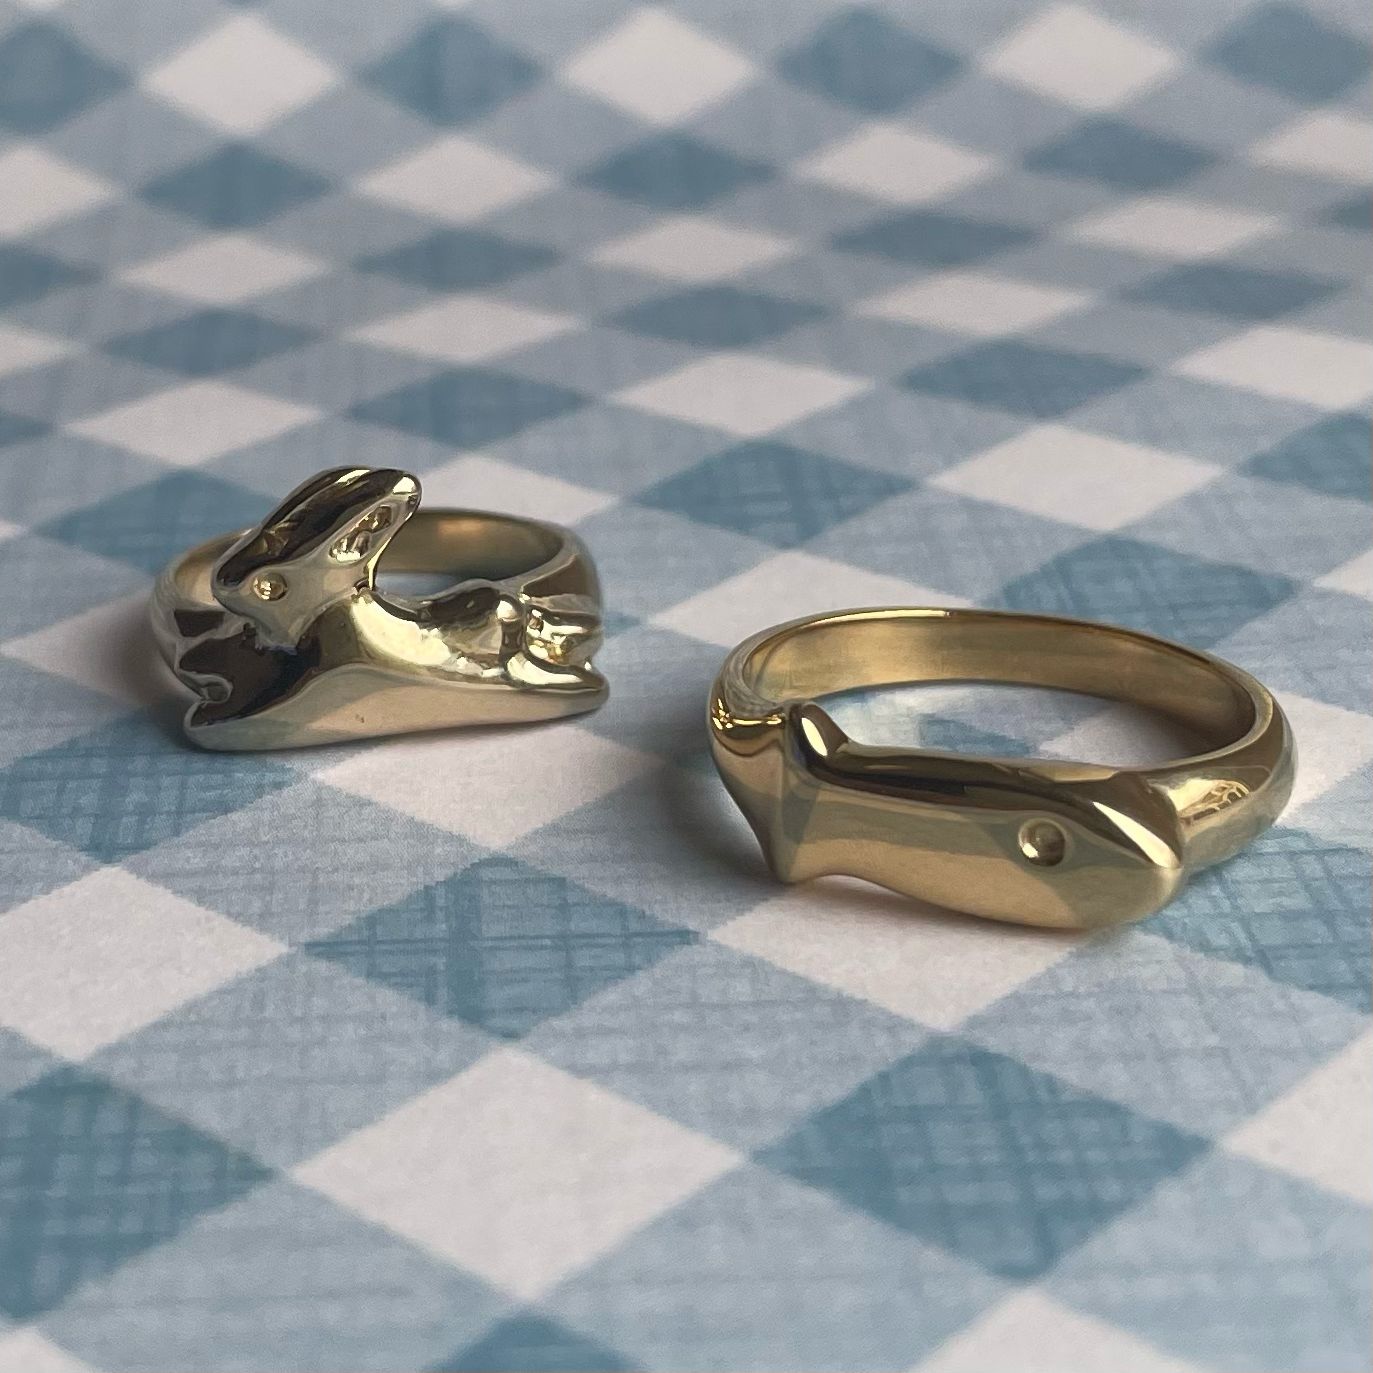 ANS DESIGNER | Coral stone ring, Stone rings for men, Mens ring designs